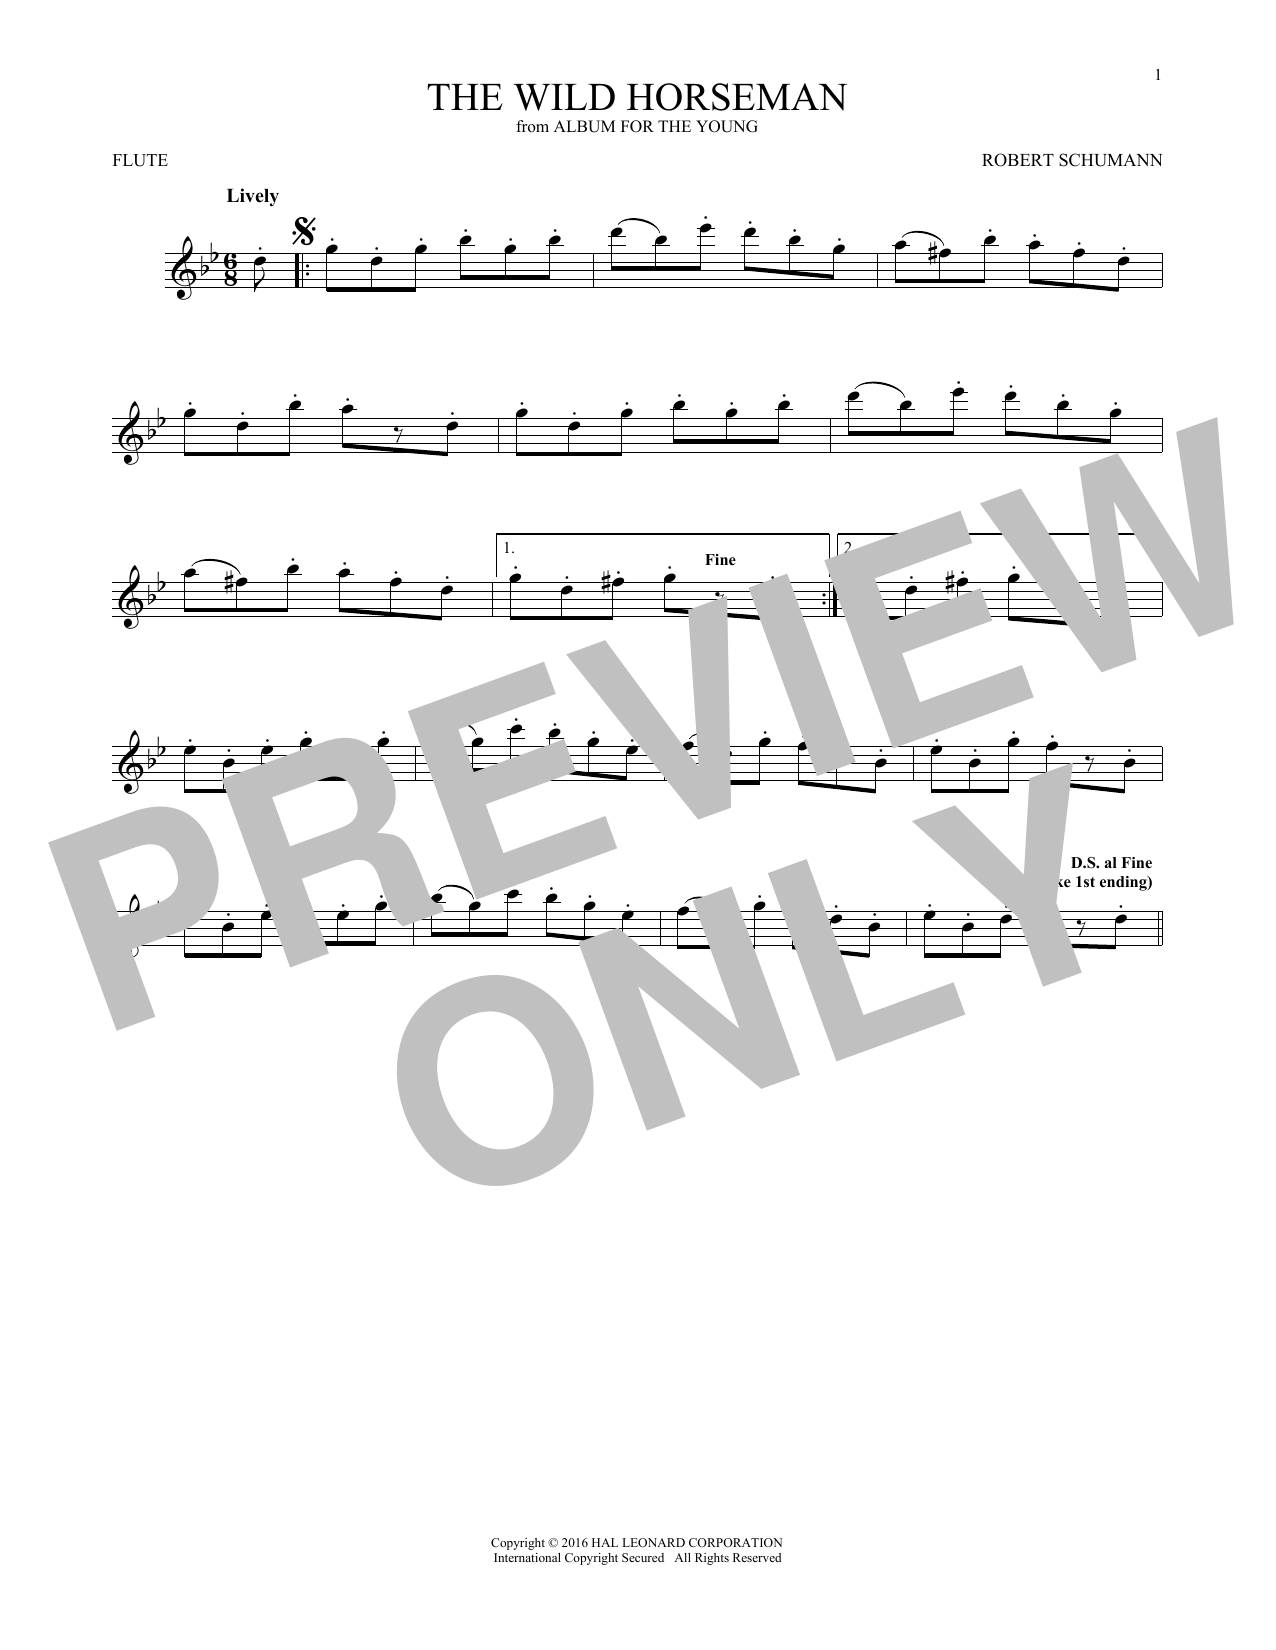 Robert Schumann The Wild Horseman (Wilder Reiter), Op. 68, No. 8 Sheet Music Notes & Chords for Violin - Download or Print PDF